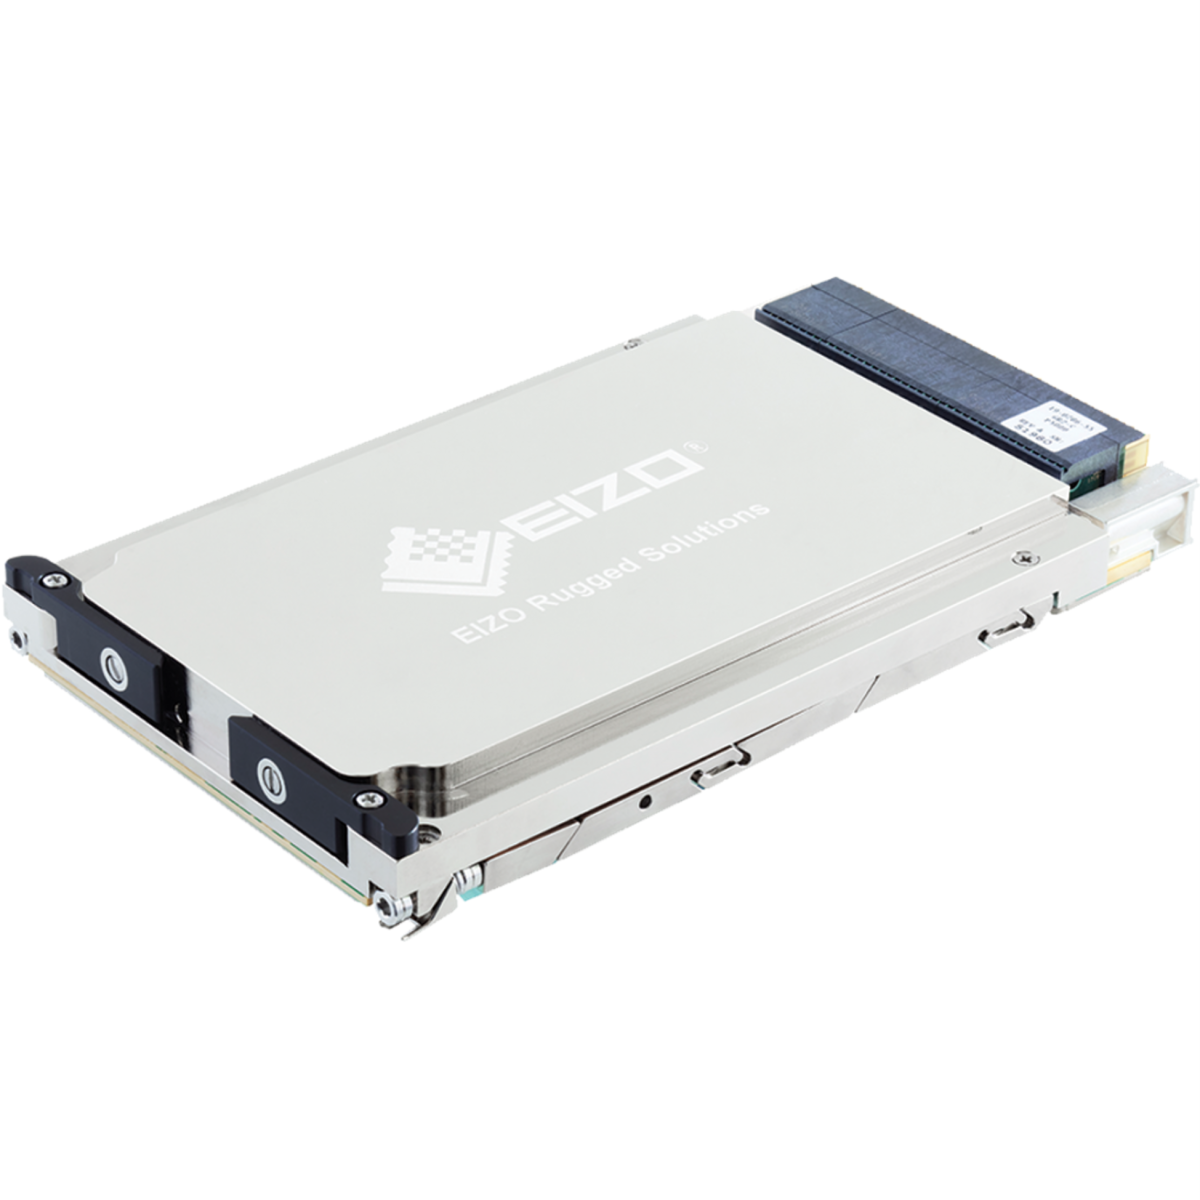 Embedded 3U VPX SBC with NVIDIA Jetson AGX Orin 64GB